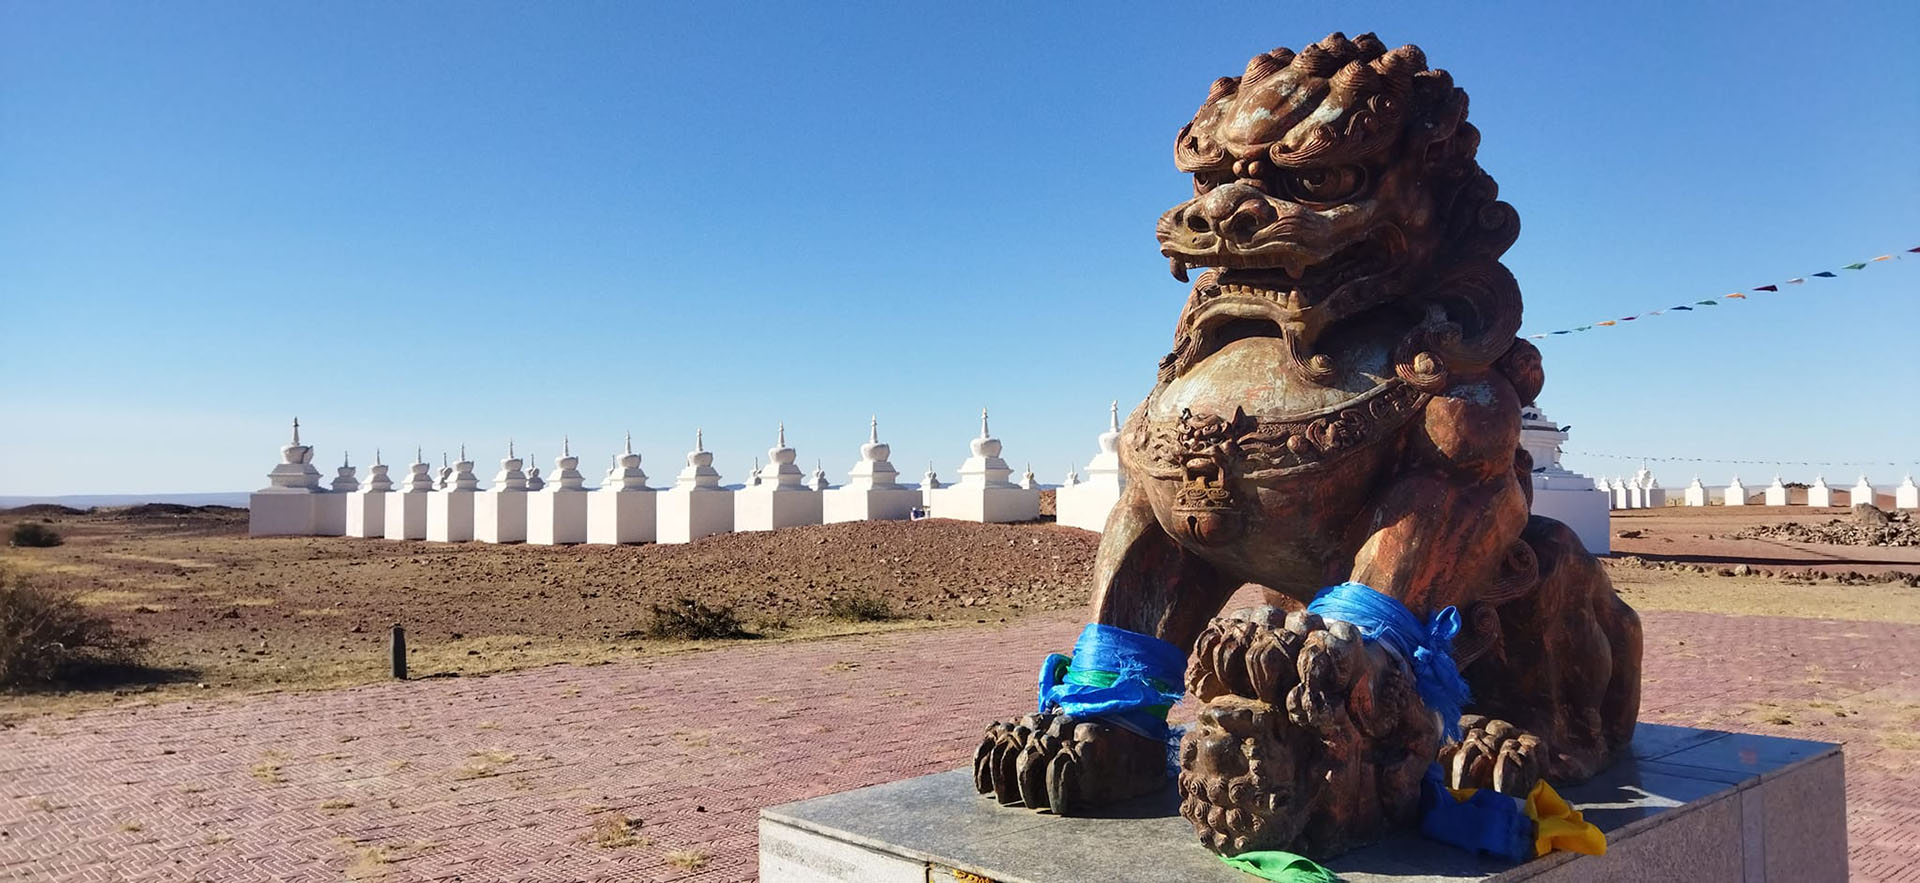 León de la entrada a las 108 Stupas del monasterio de Khammar kid, Gobi, Mongolia